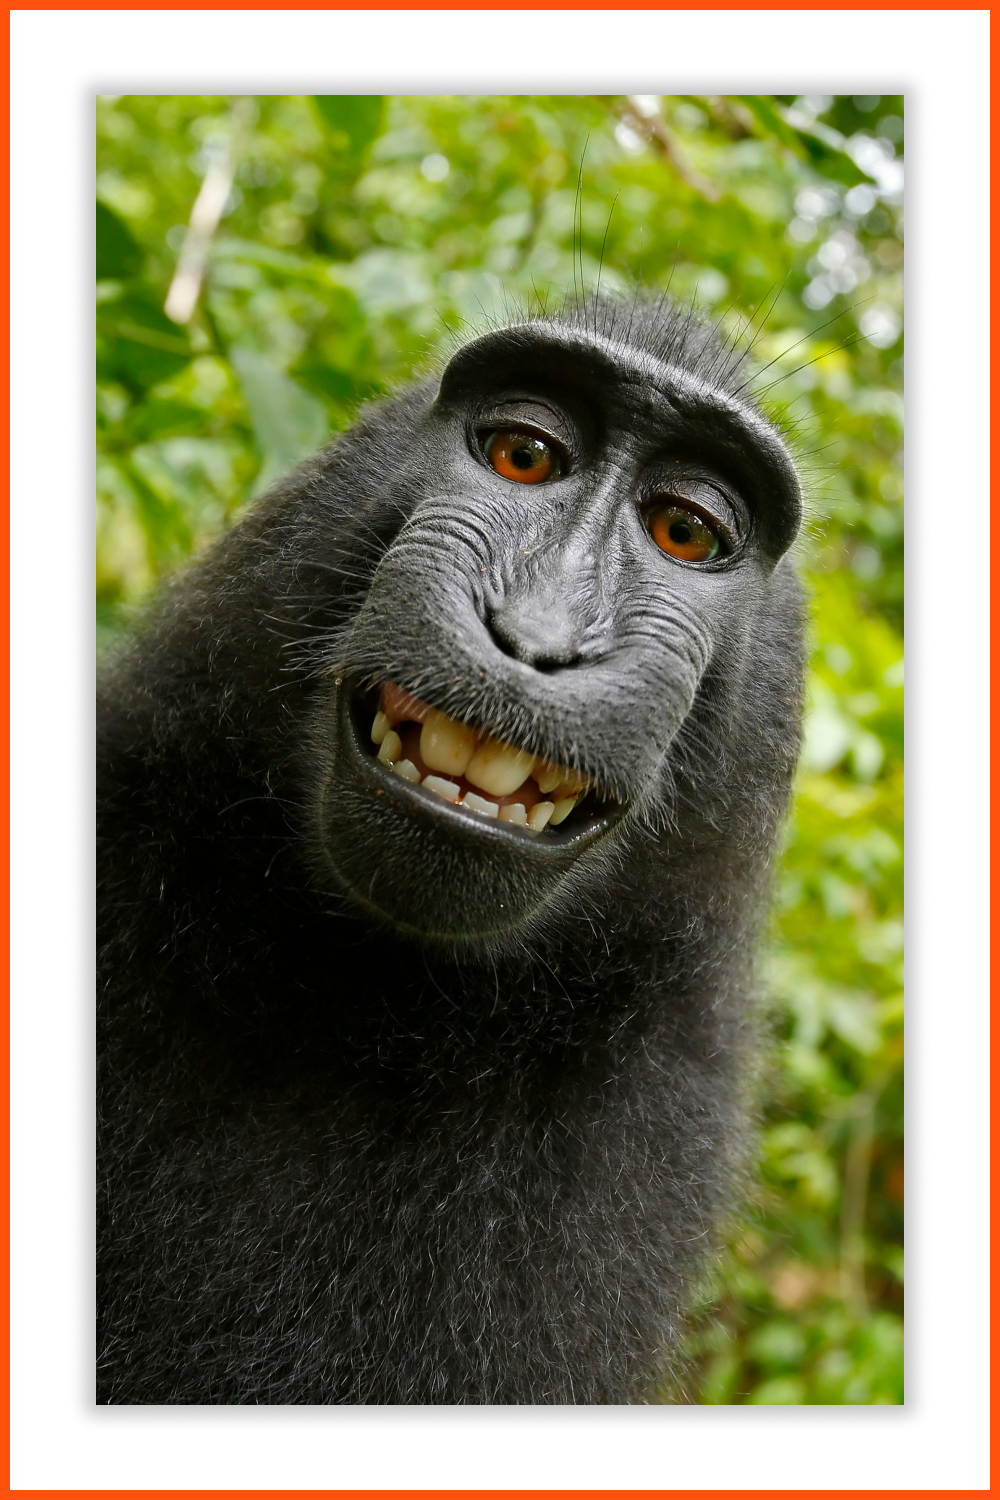 Face of black smiling monkey.